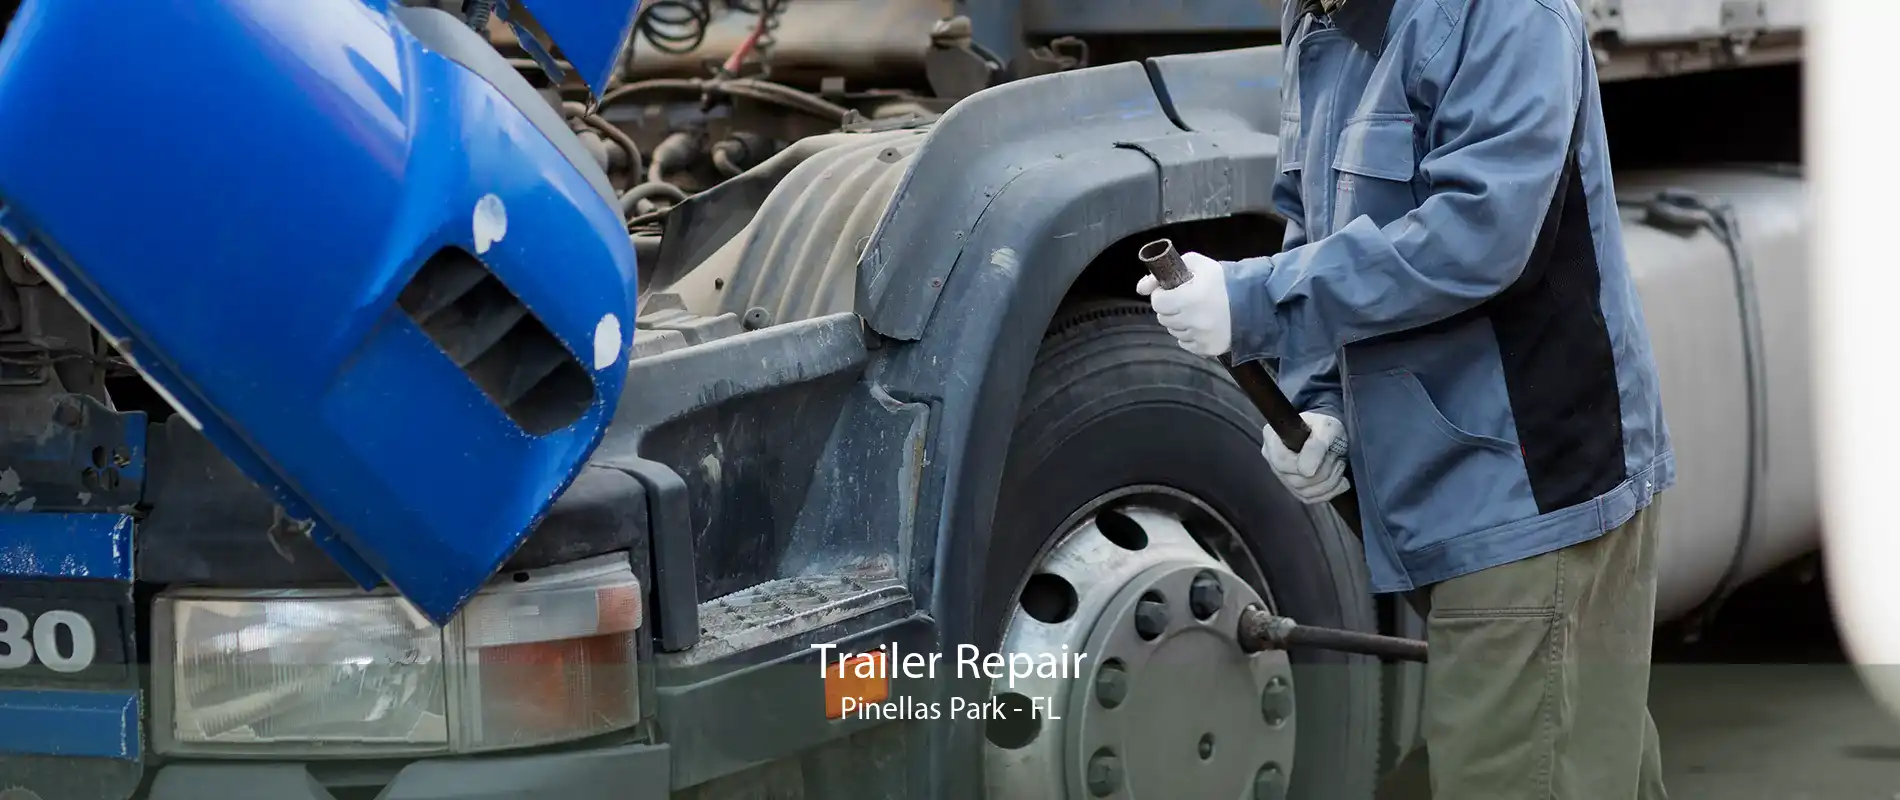 Trailer Repair Pinellas Park - FL